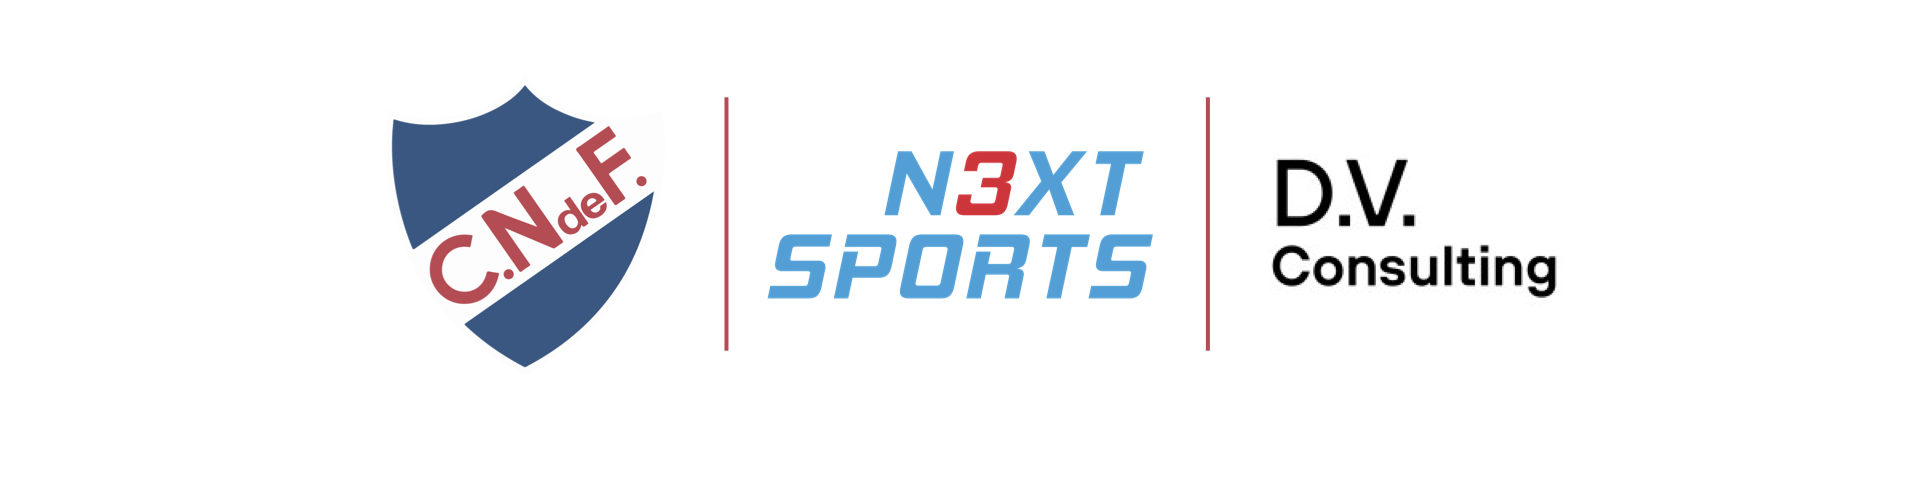 N3XT Sports to lead Club Nacional de Football digital transformation  process - N3XT SPORTS